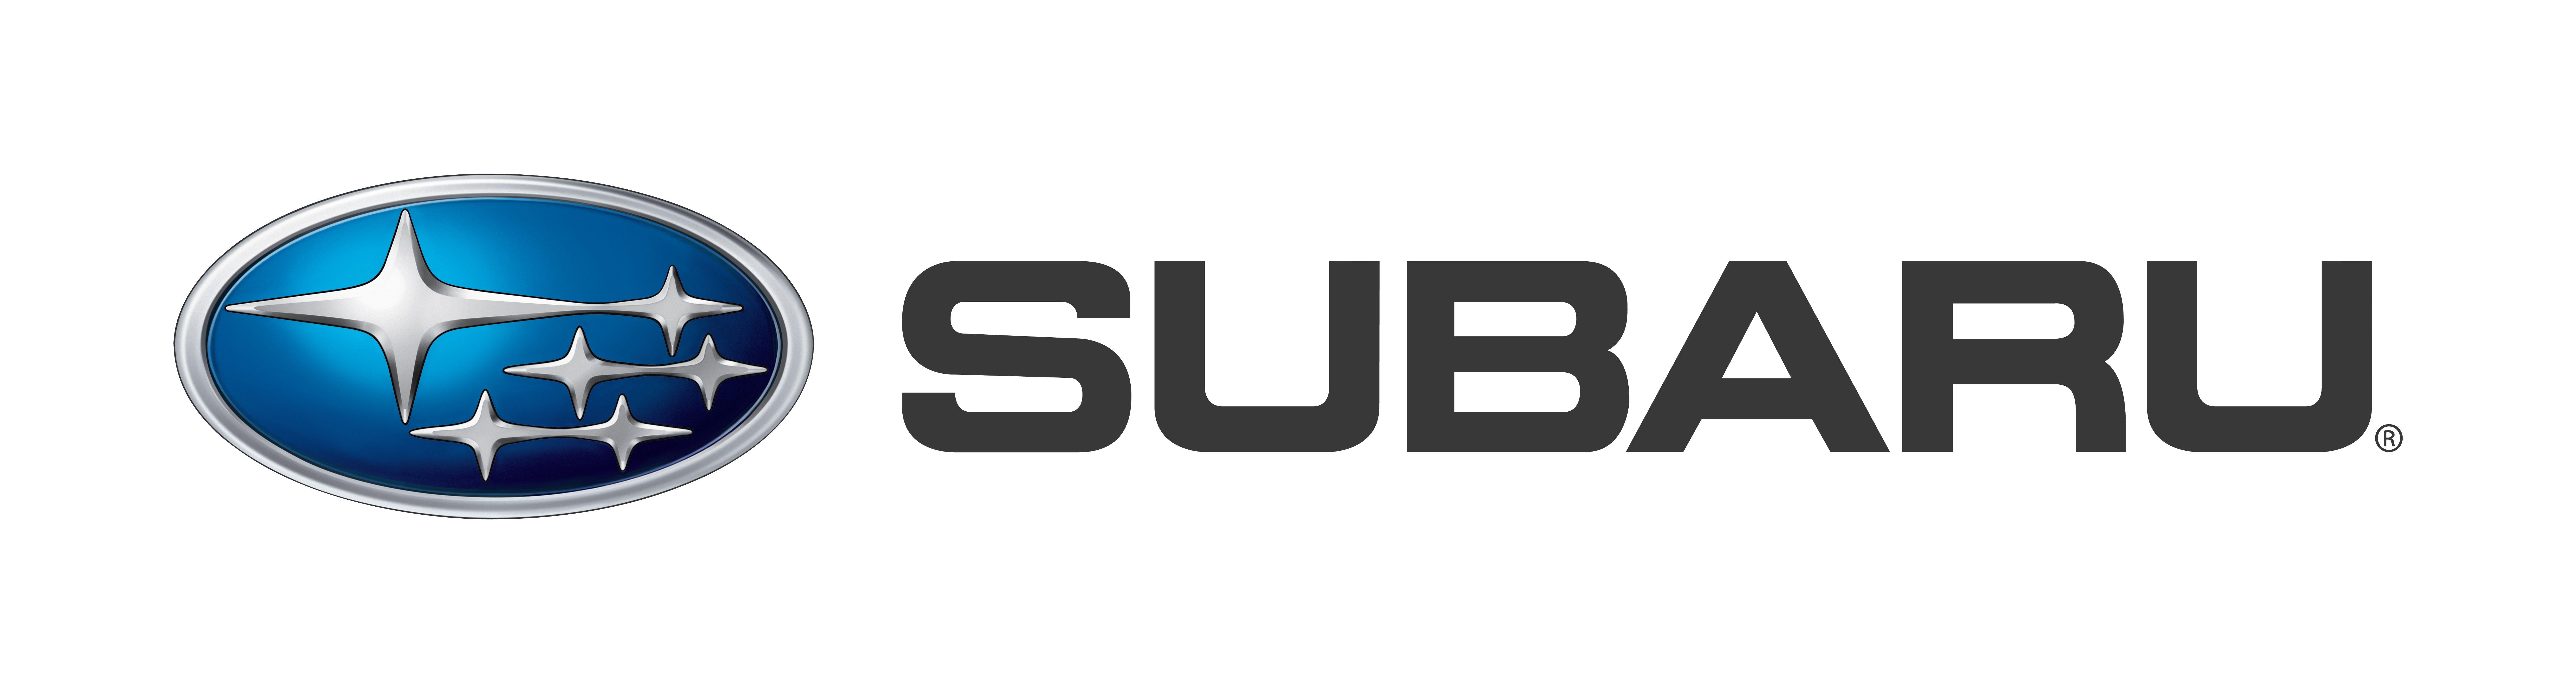 2018 Subaru Logo - Subaru